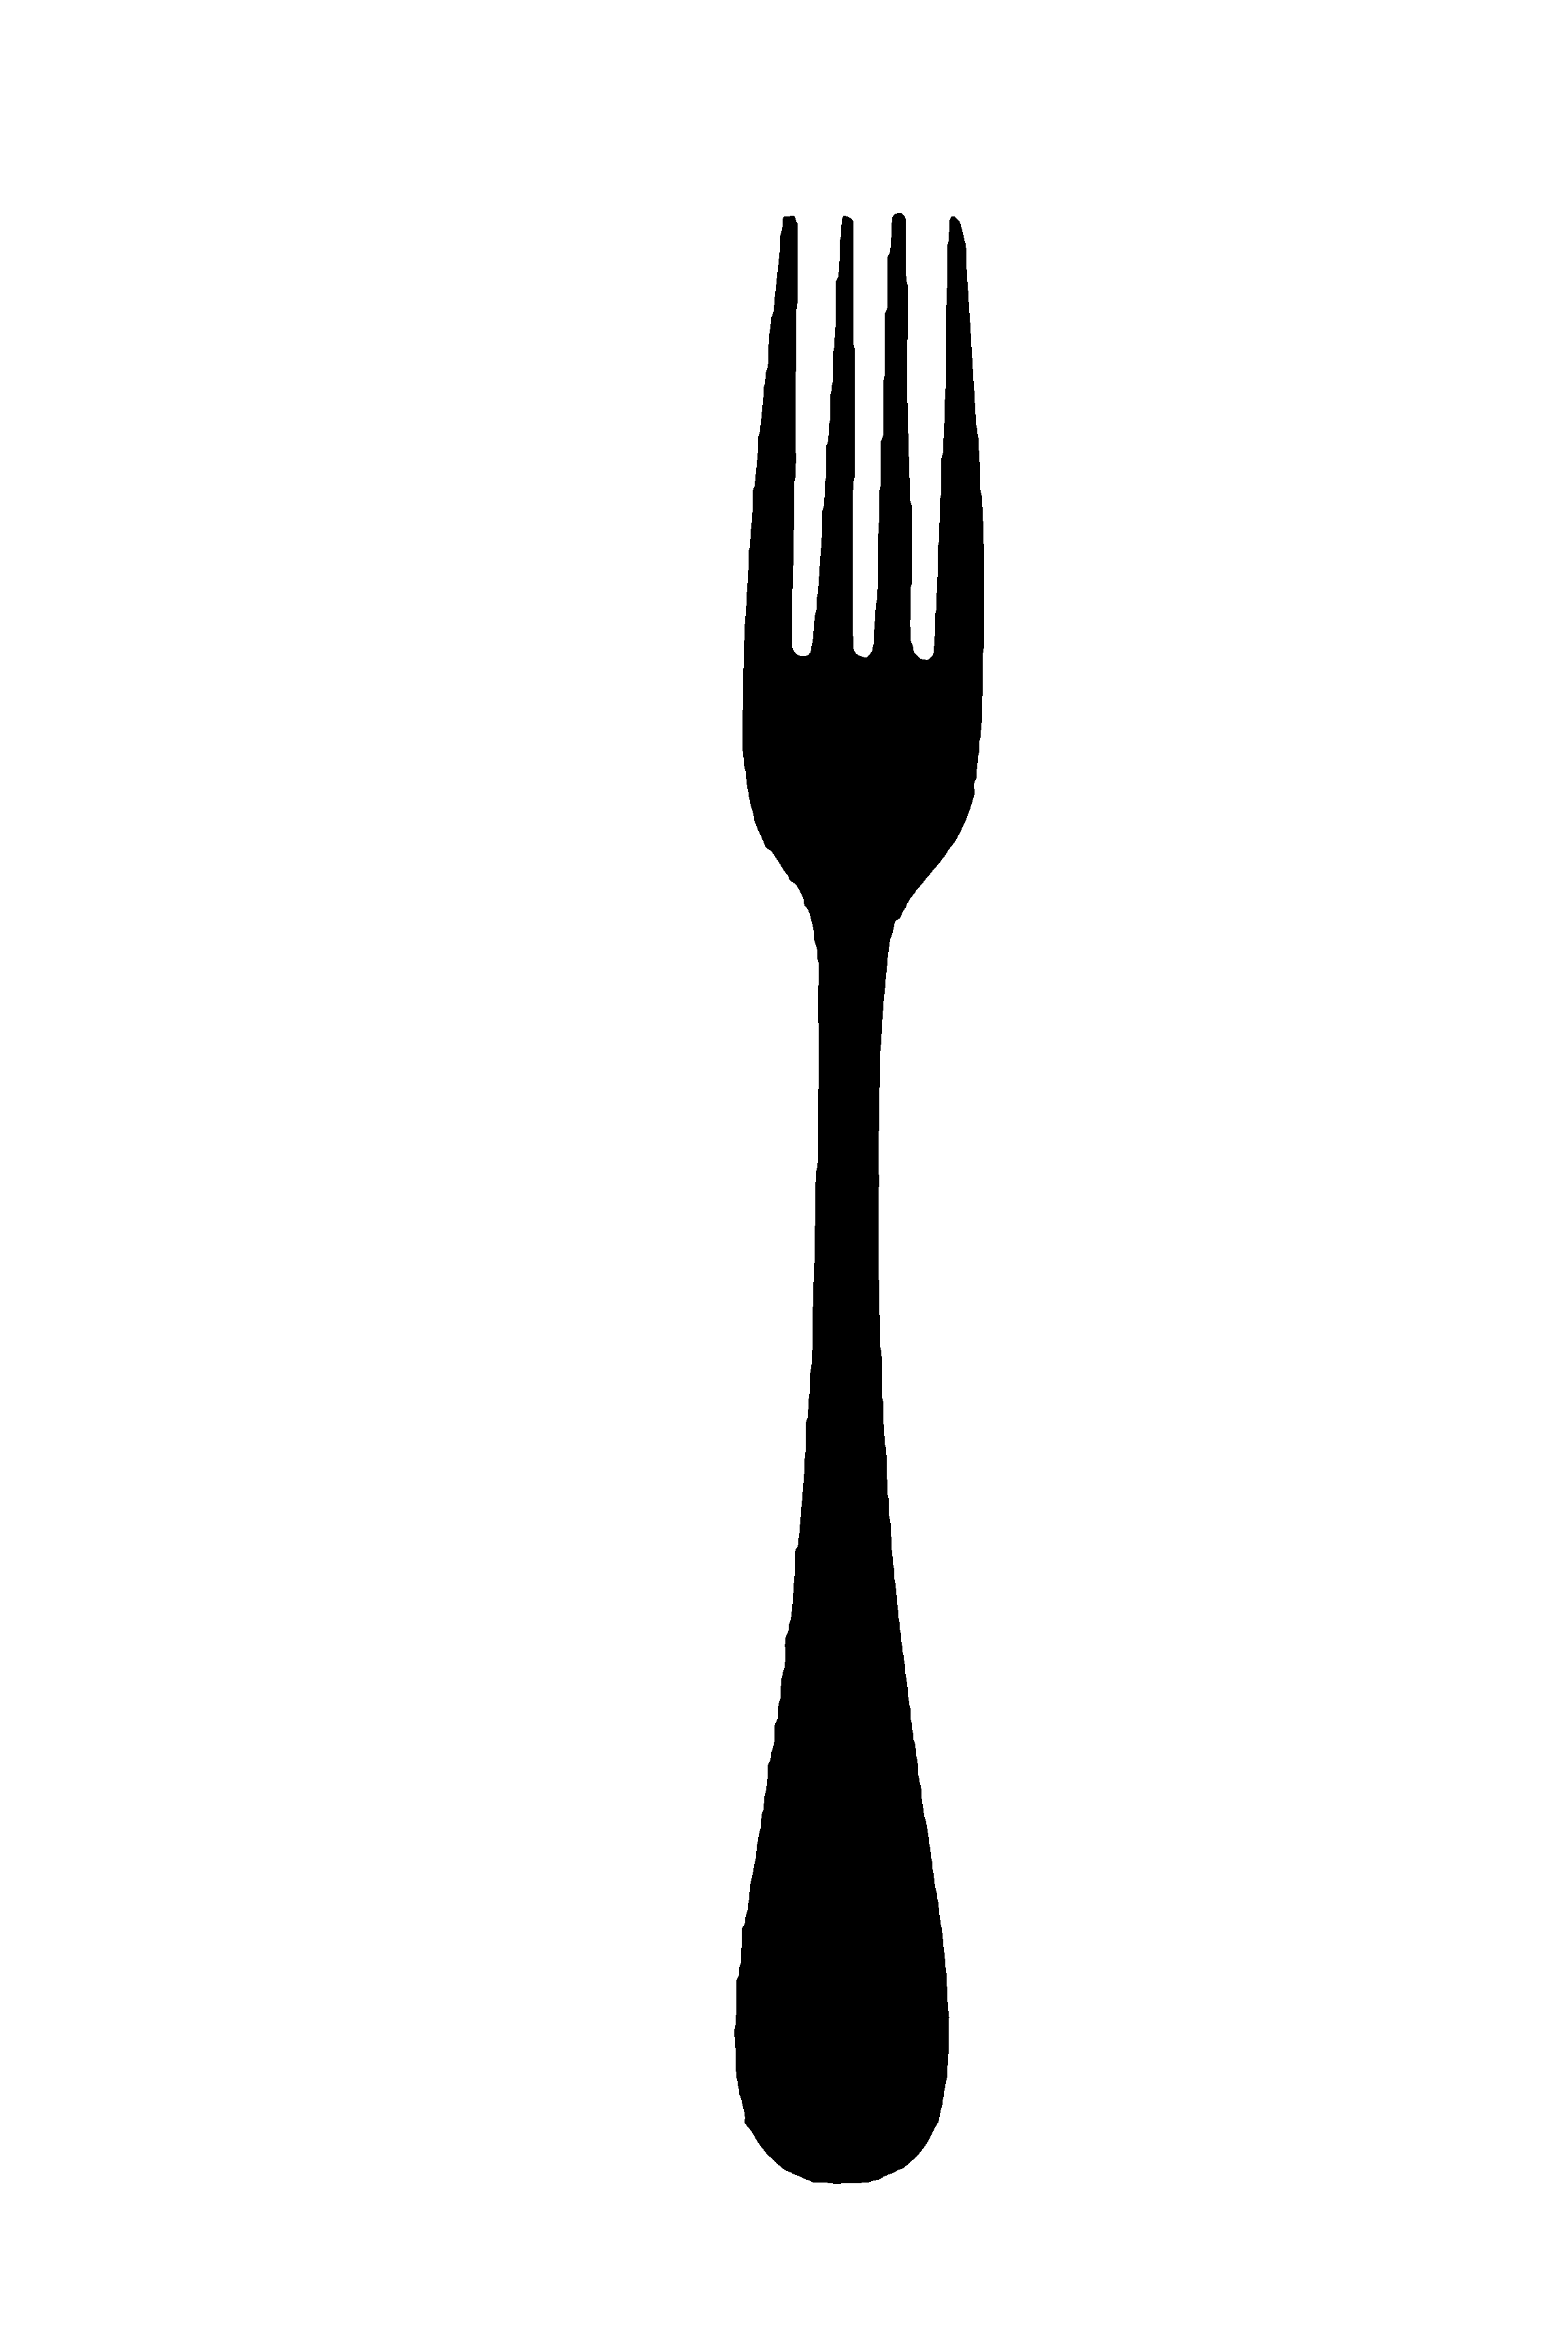 Vintage spoon, fork and knife